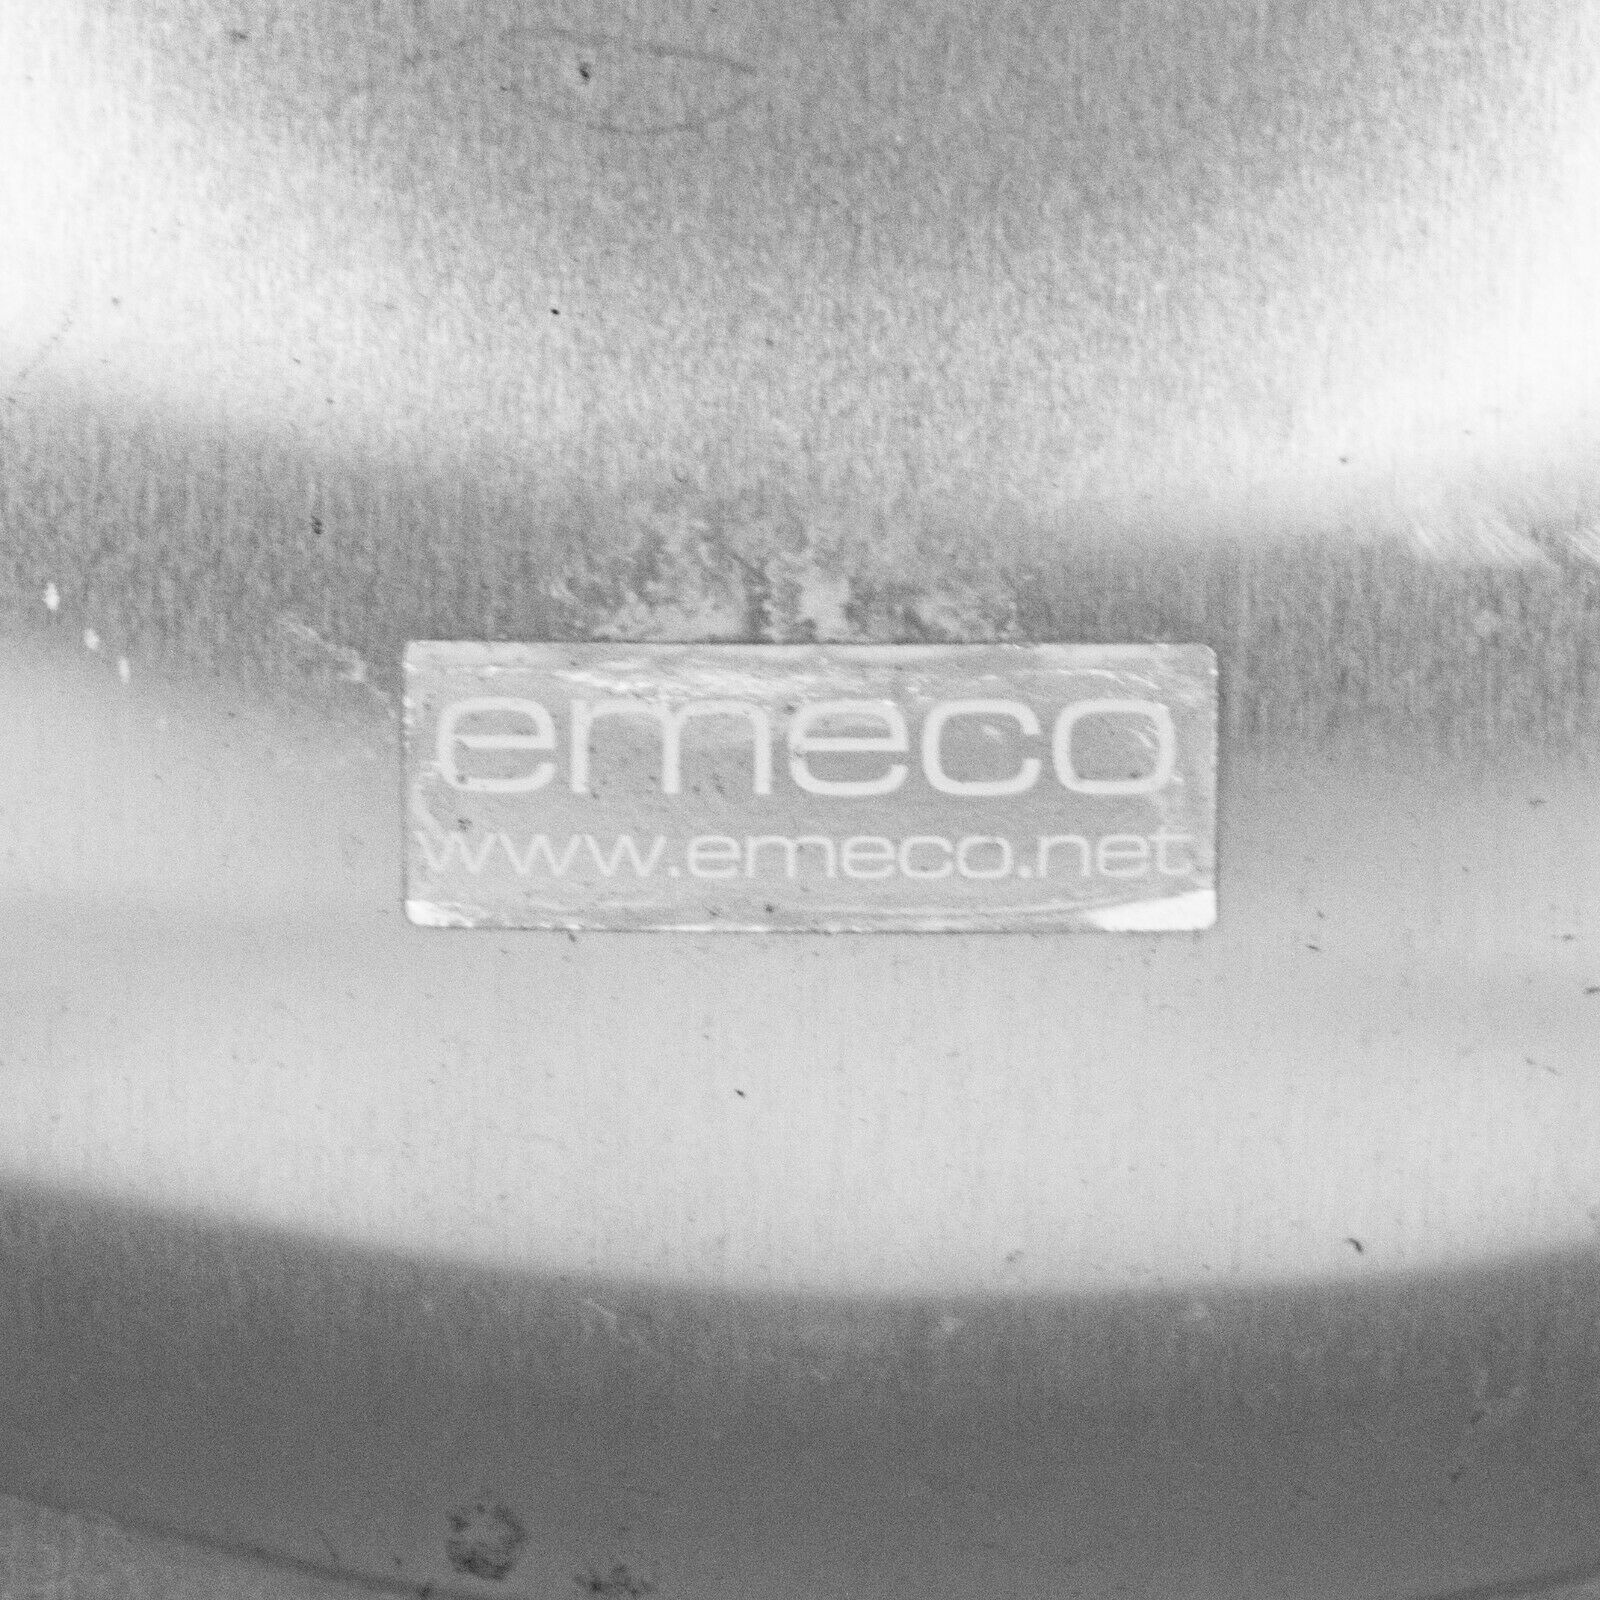 SOLD 2010s Philippe Starck for Emeco Hudson Bar Stool Pair Brushed Aluminum Finish